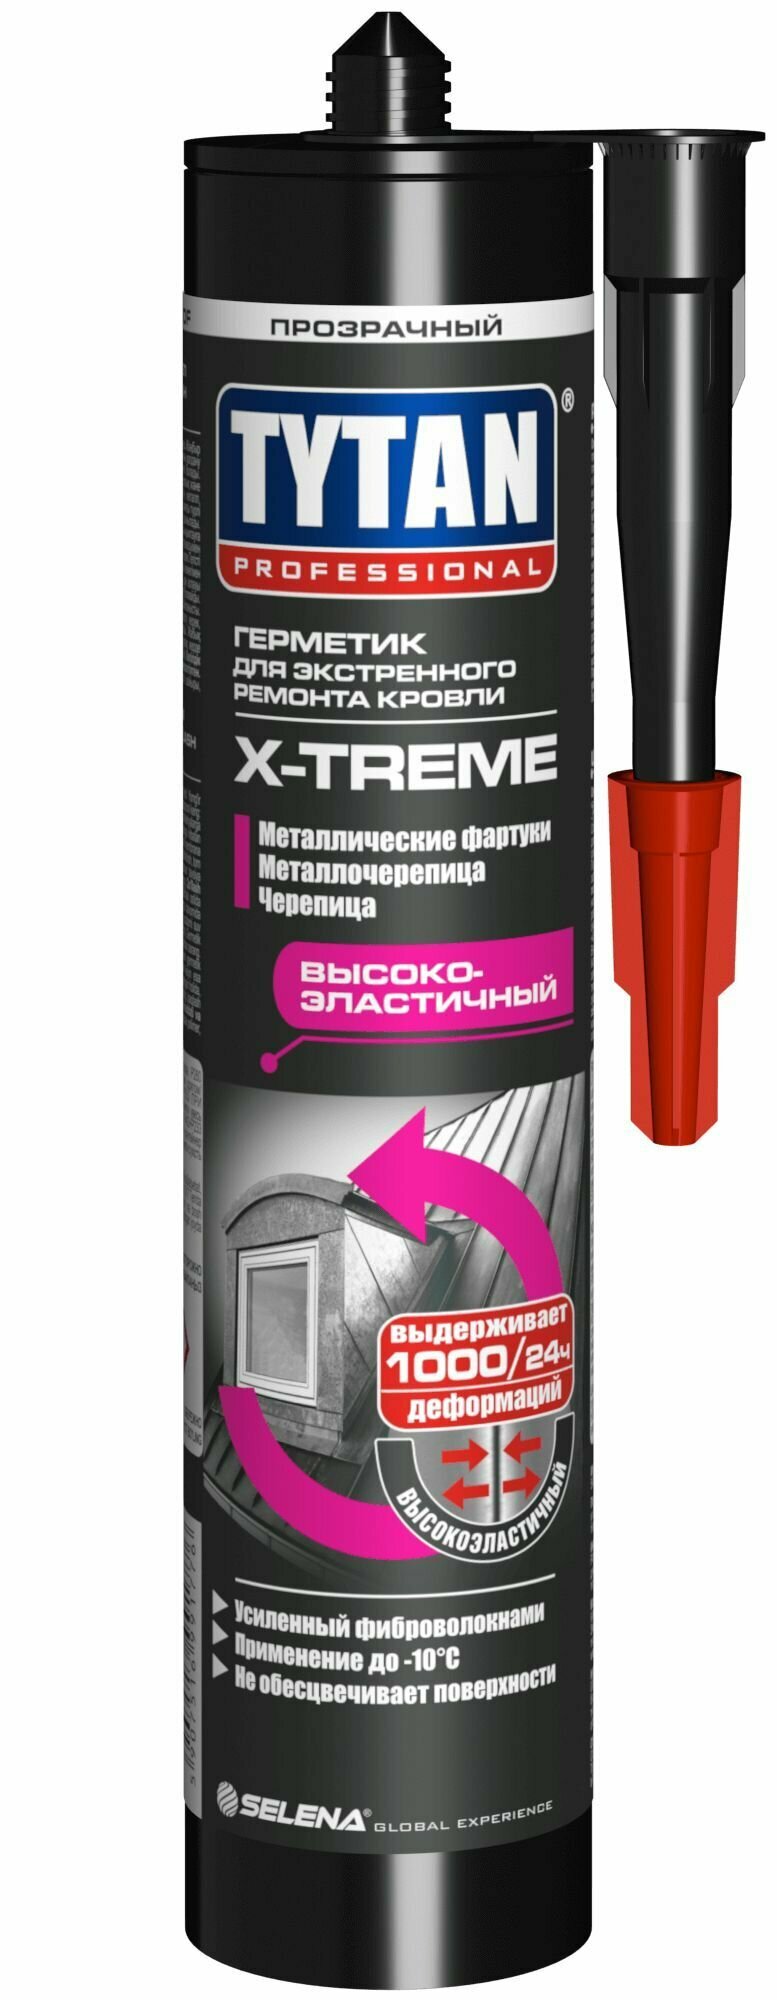 Герметик для экстренного ремонта Кровли X-treme - Tytan Professional прозрачный, 310мл